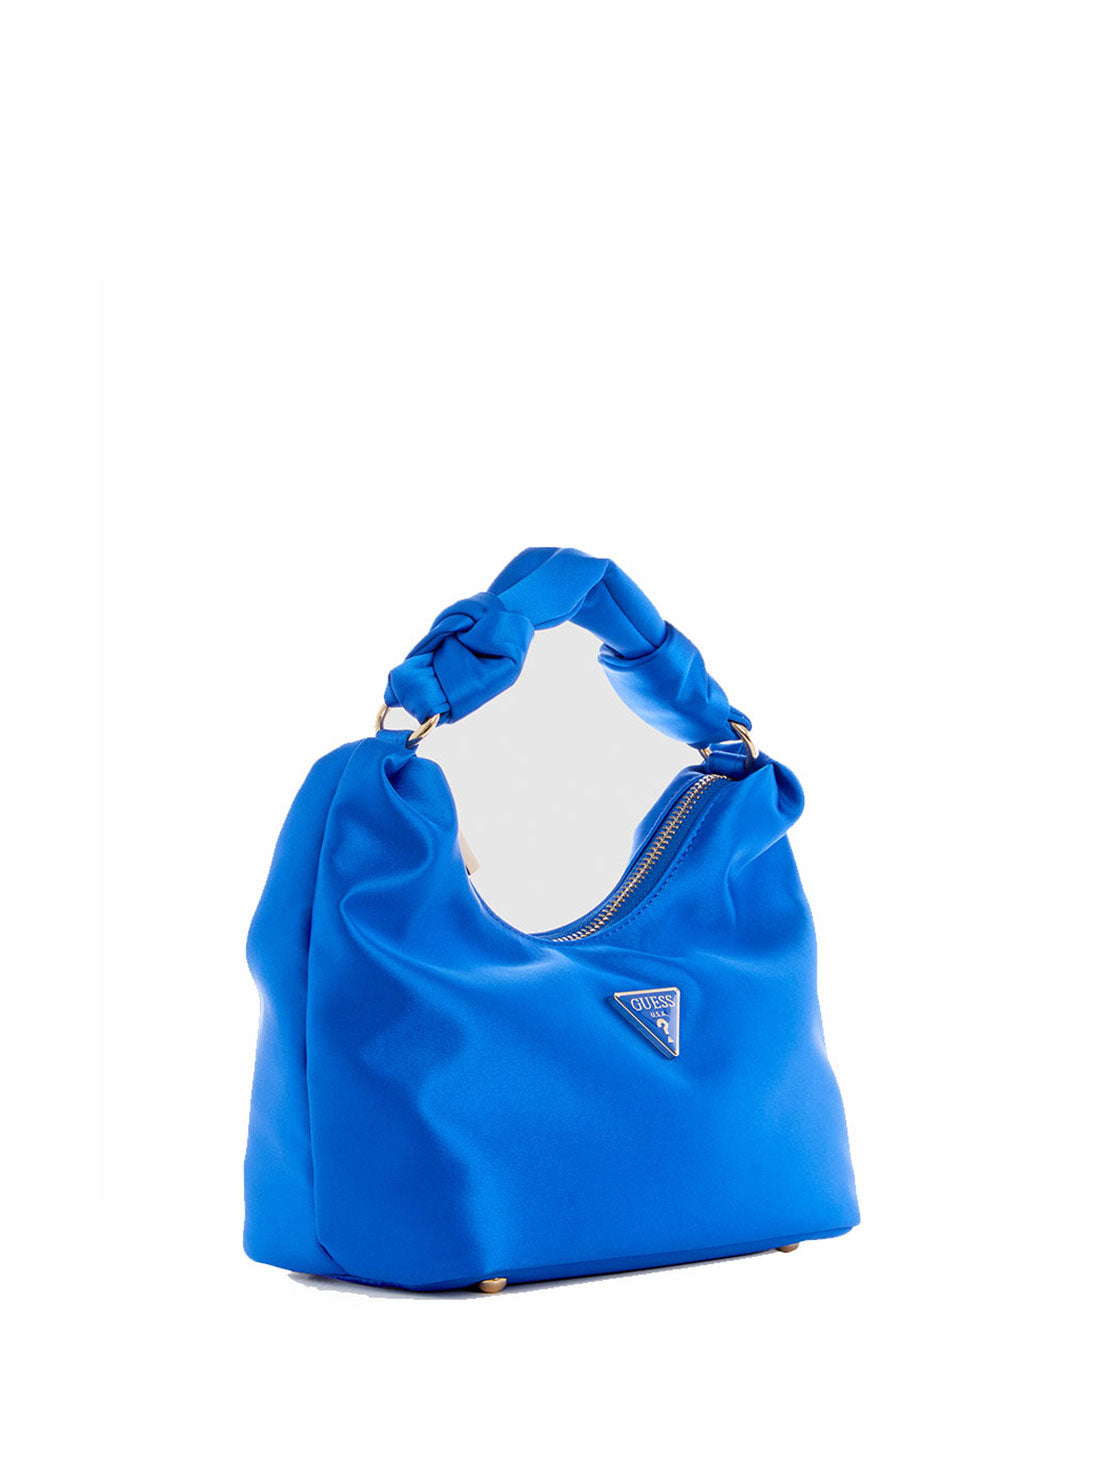 GUESS Women's Blue Velina Hobo Bag EG876502 Angle View